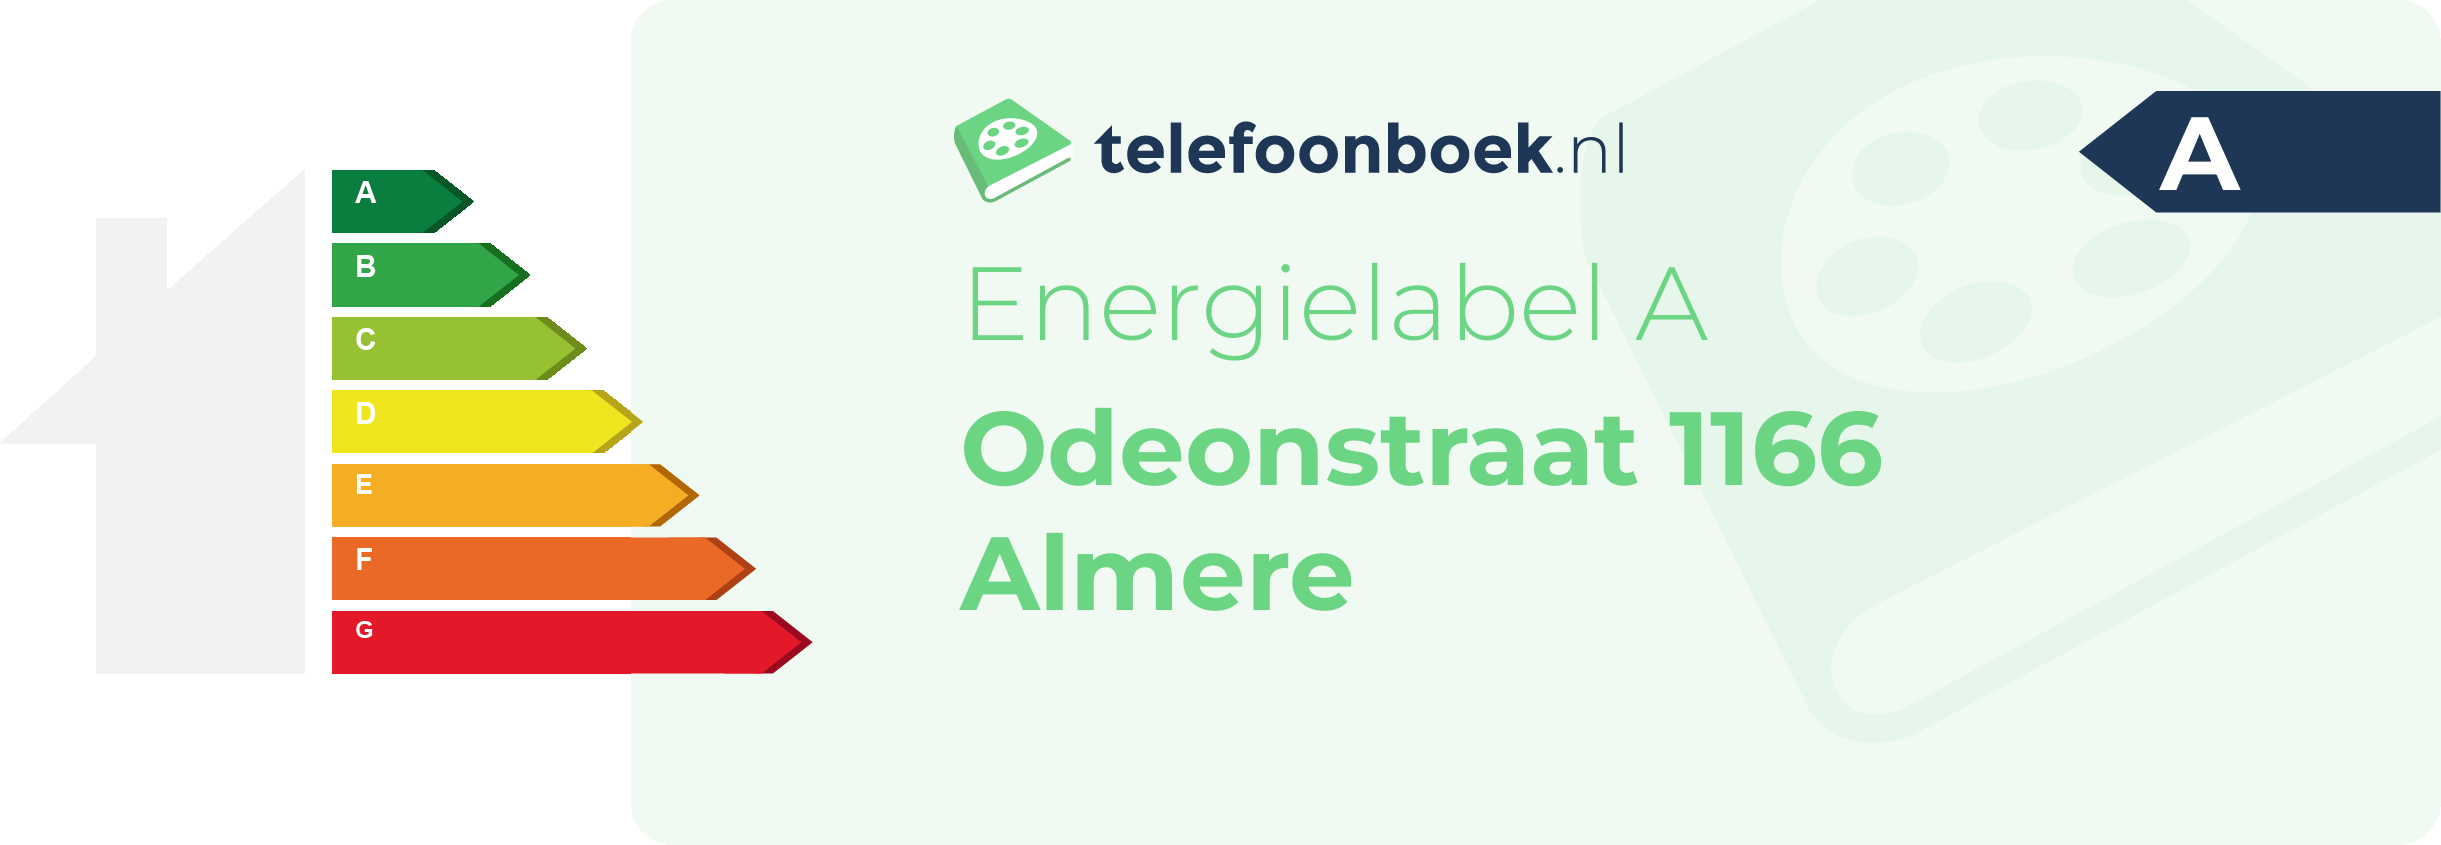 Energielabel Odeonstraat 1166 Almere